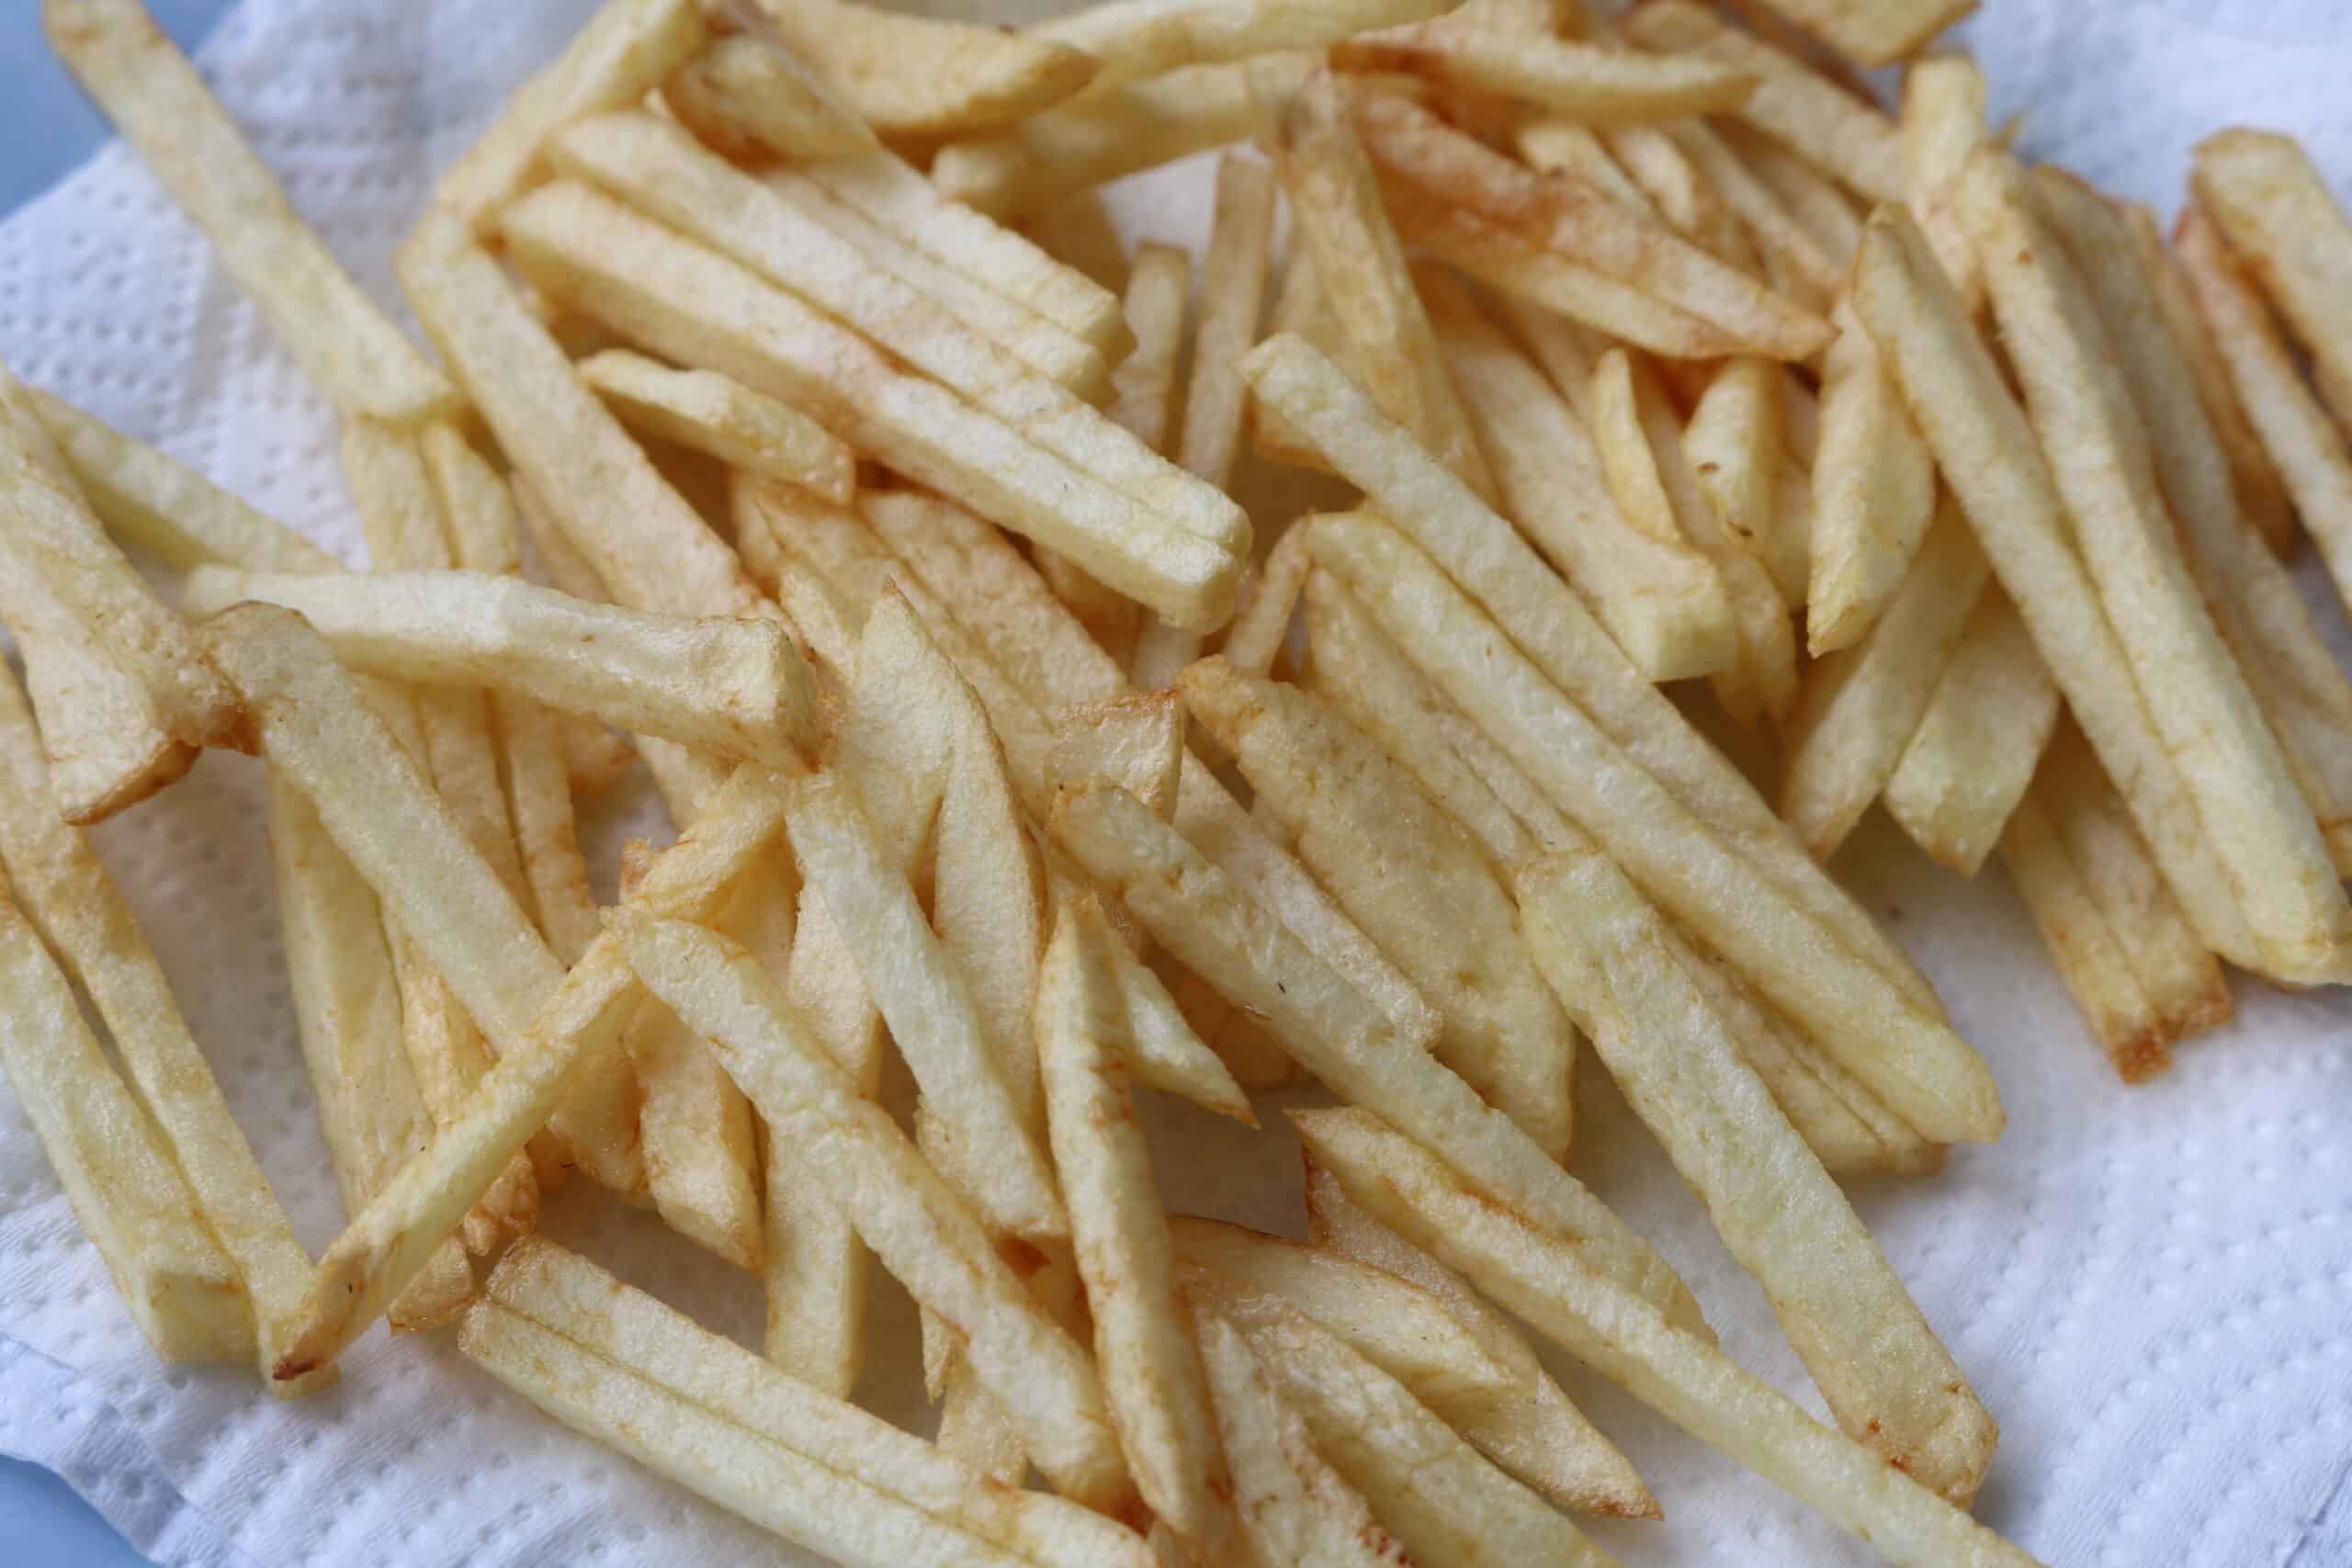 handcut fries